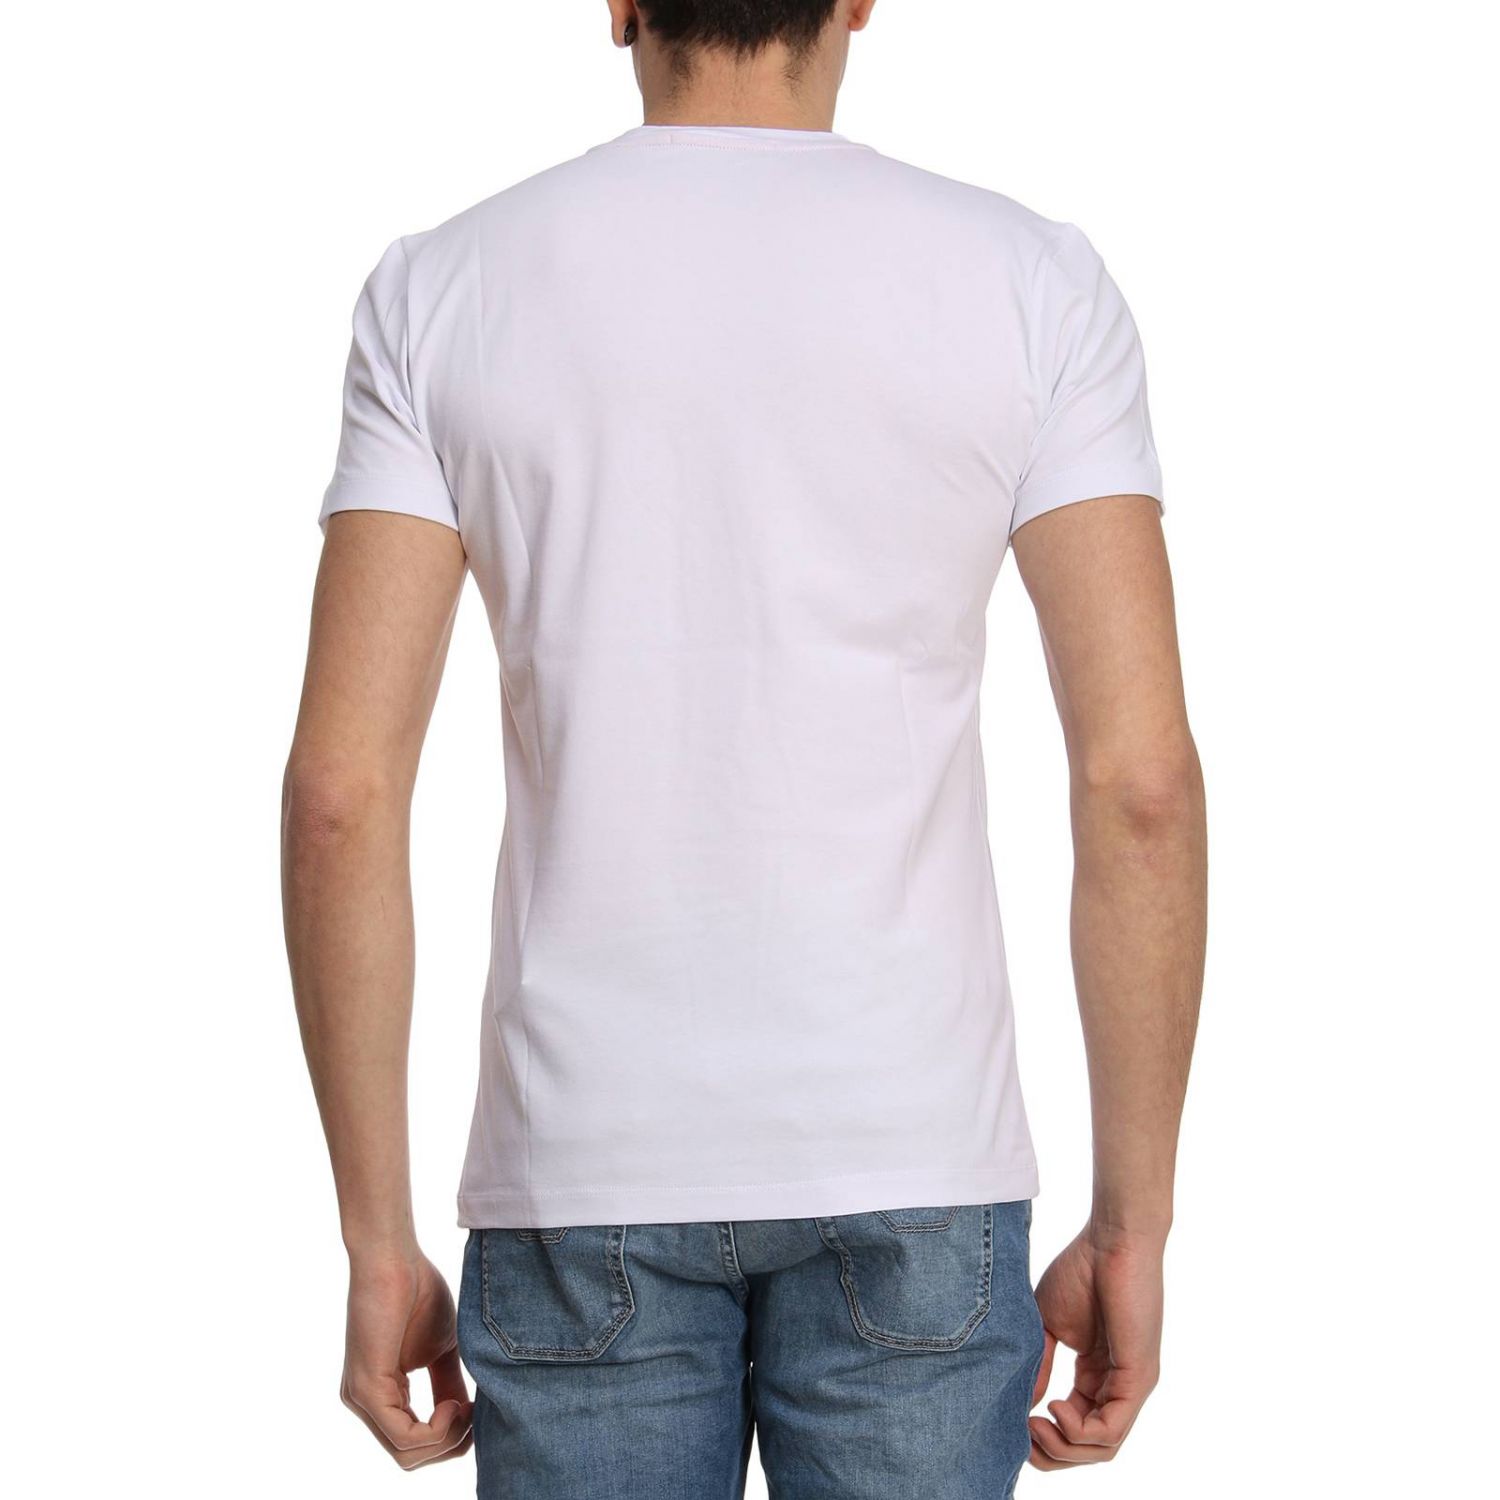 Paciotti 4Us Outlet: T-shirt men - White | T-Shirt Paciotti 4Us 1212 ...